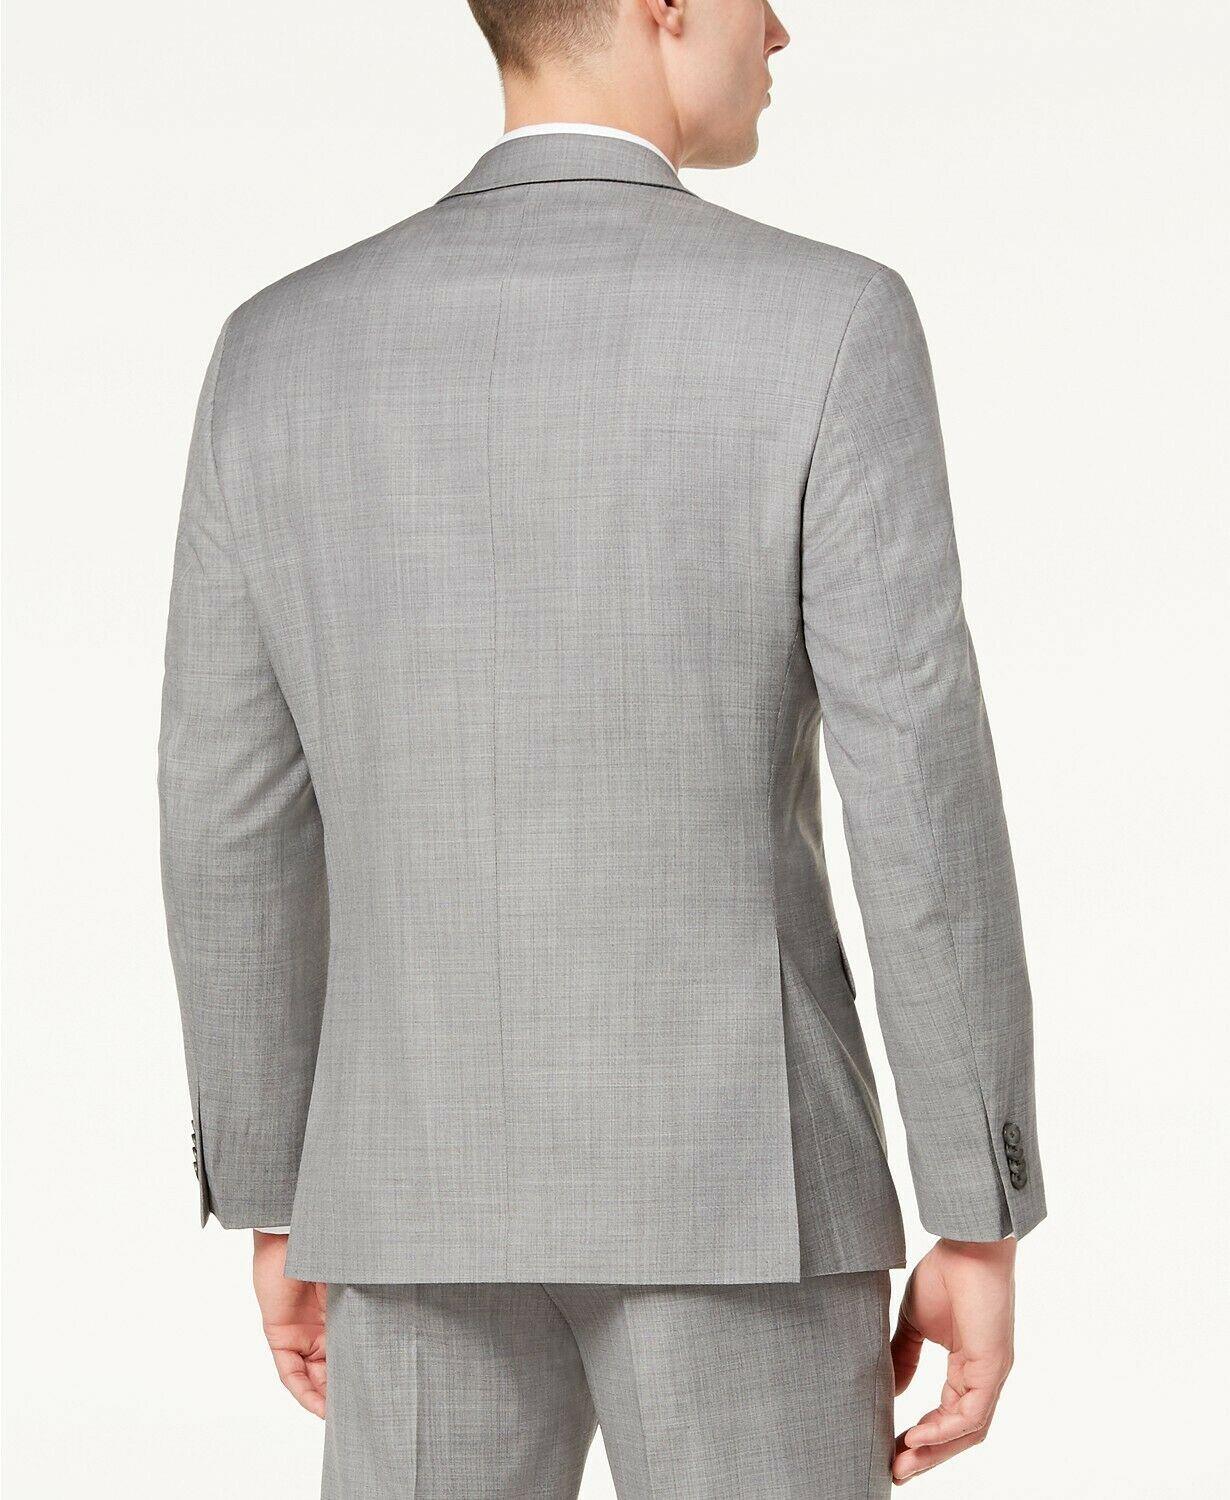 Michael Kors Men's Classic-Fit Airsoft Stretch Grey Suit Jacket 40L Two button - Bristol Apparel Co